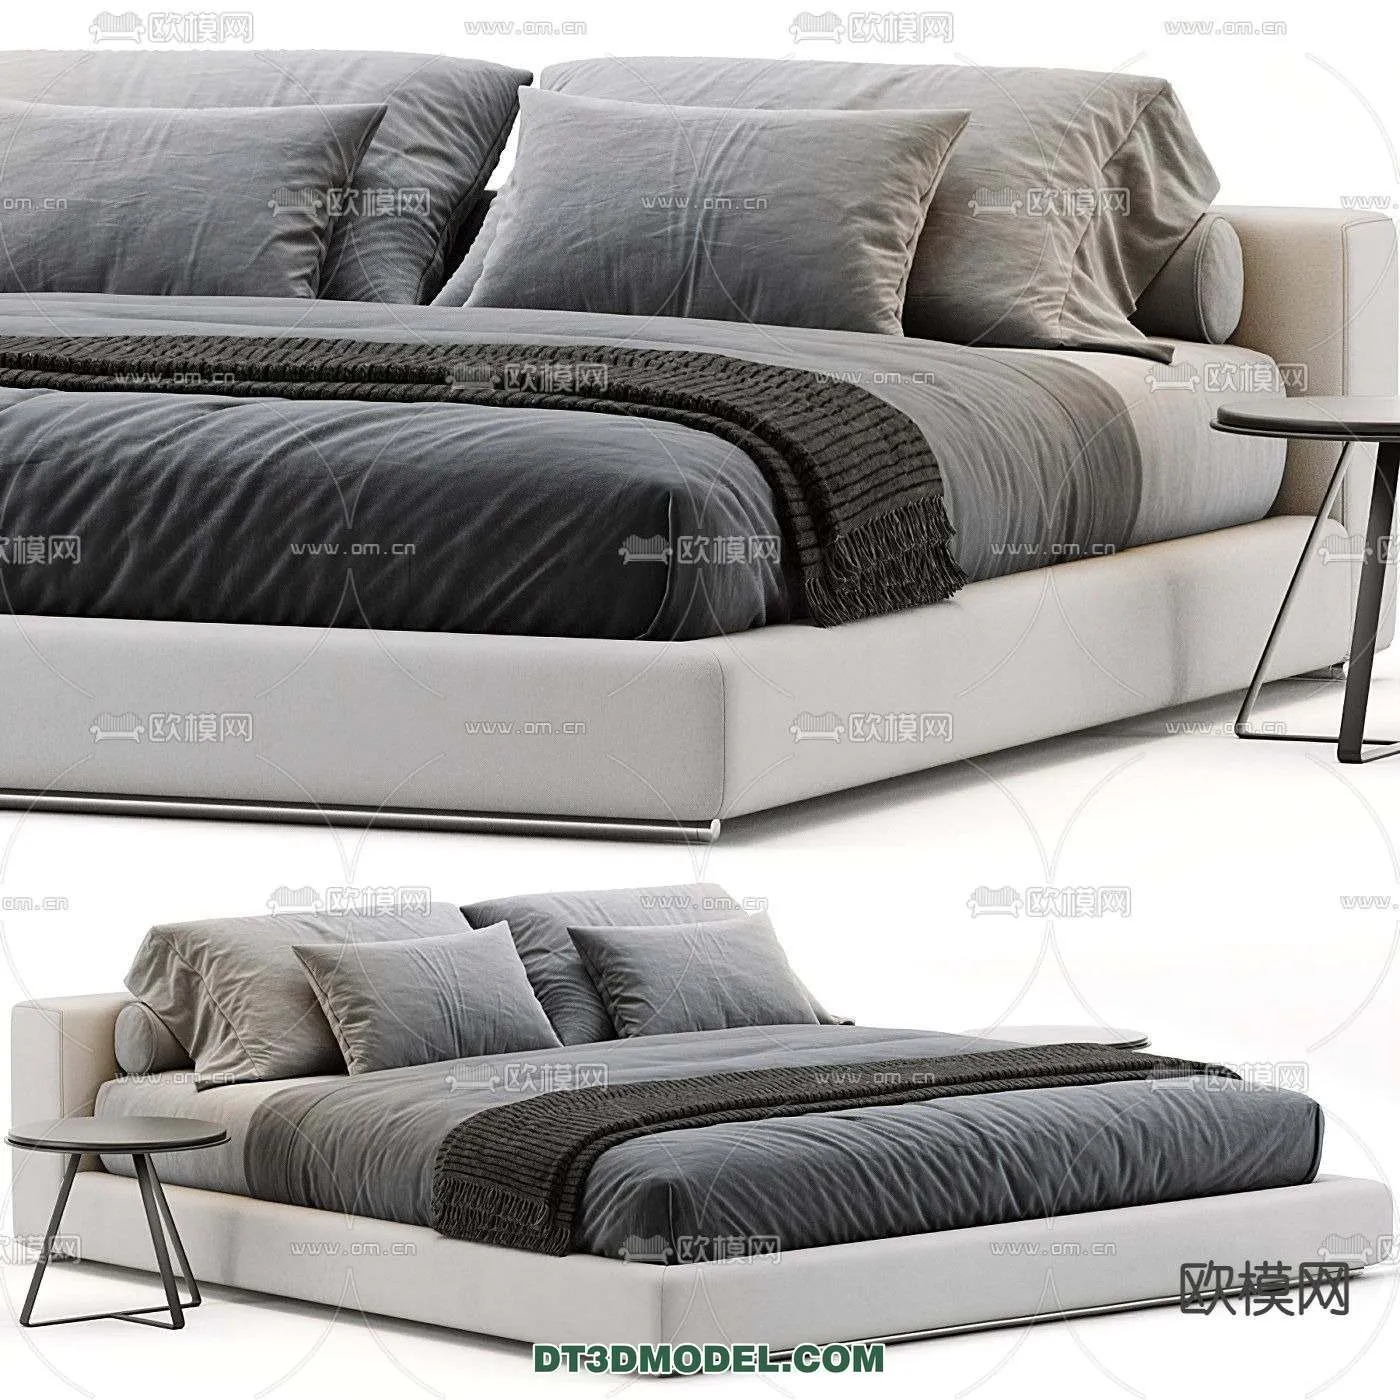 Double Bed 3D Models – 0037